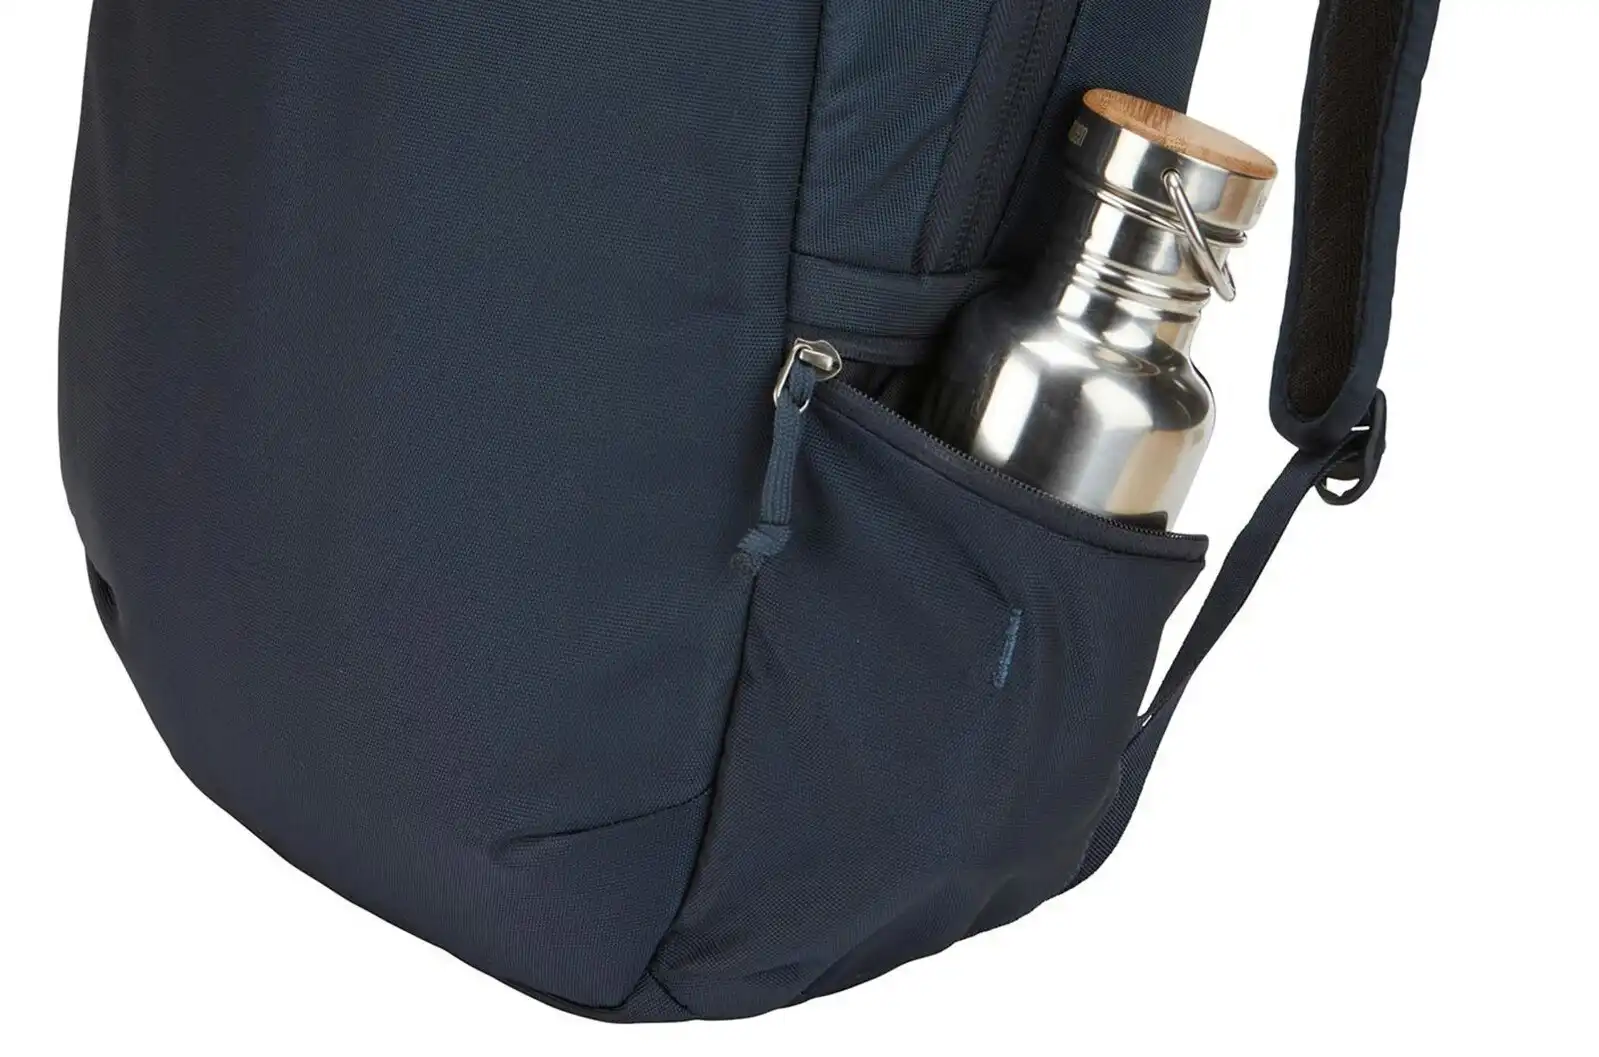 Thule Subterra 23L/50cm Travel Backpack Bag for 15" MacBook/Laptop Mineral Navy